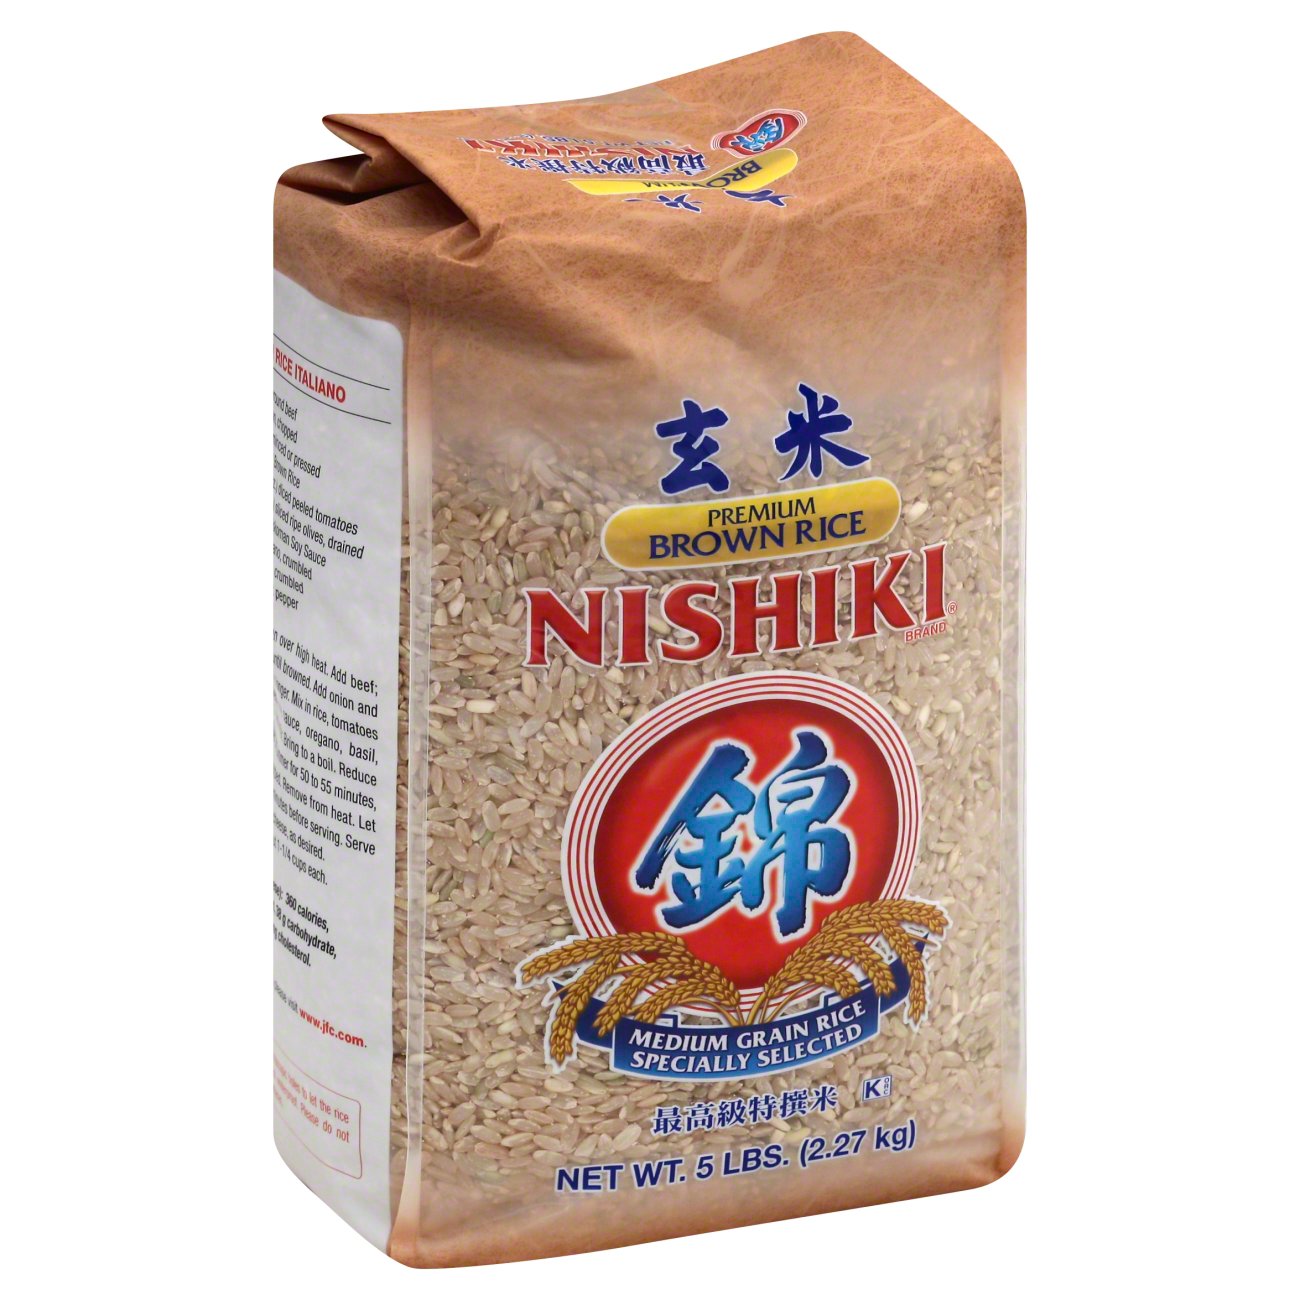 Nishiki Premium Brown Rice - Shop Pasta & Rice at H-E-B